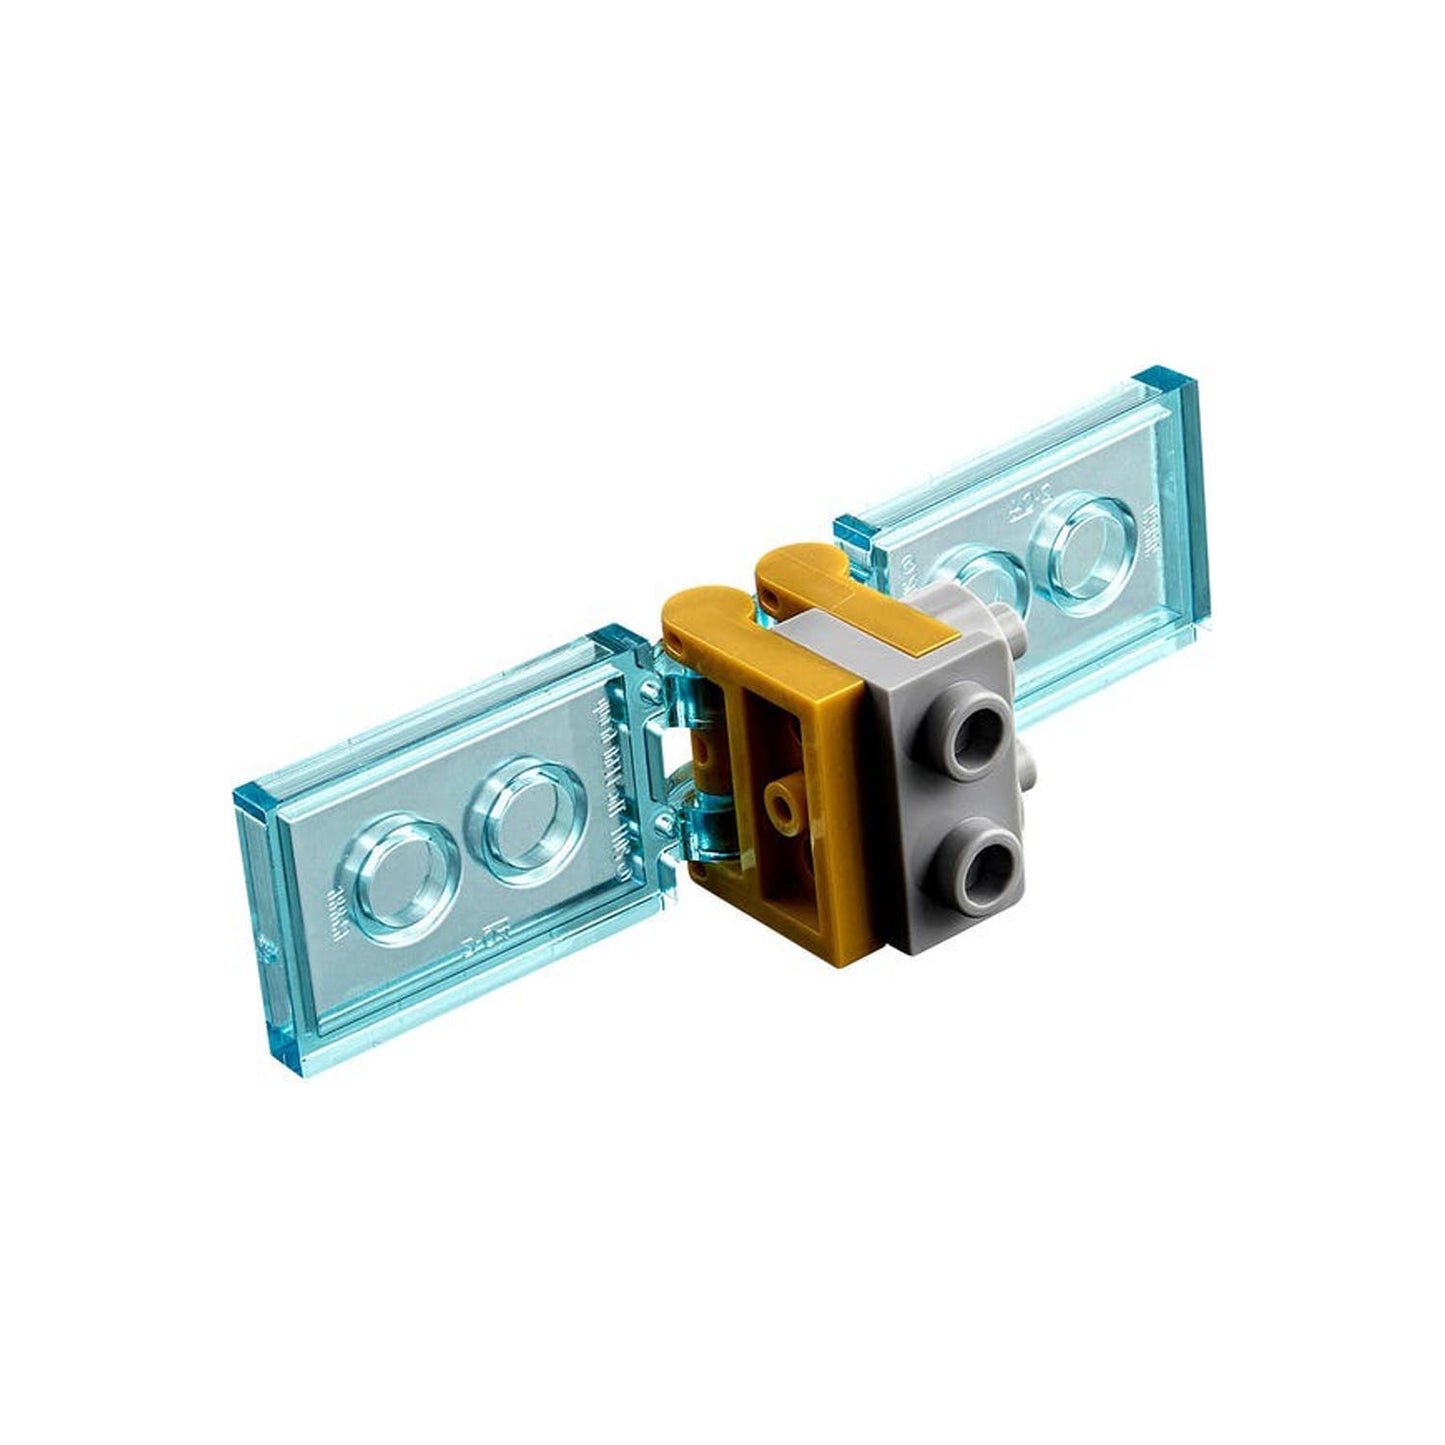 Lego Creator Transbordador Espacial 31134 - Crazygames